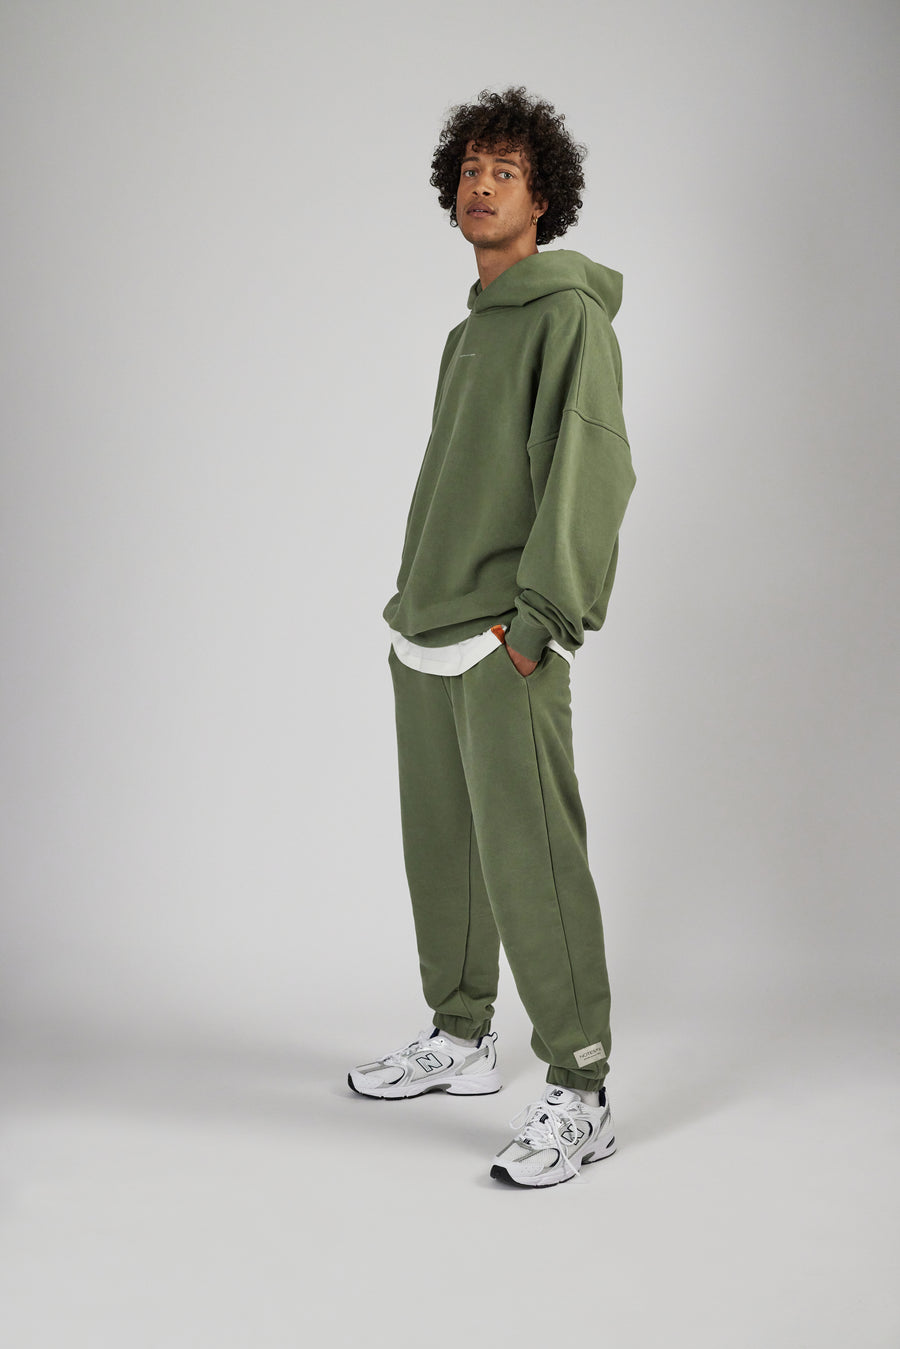 Man wearing unisex sweatpants and hoodie in color sage green